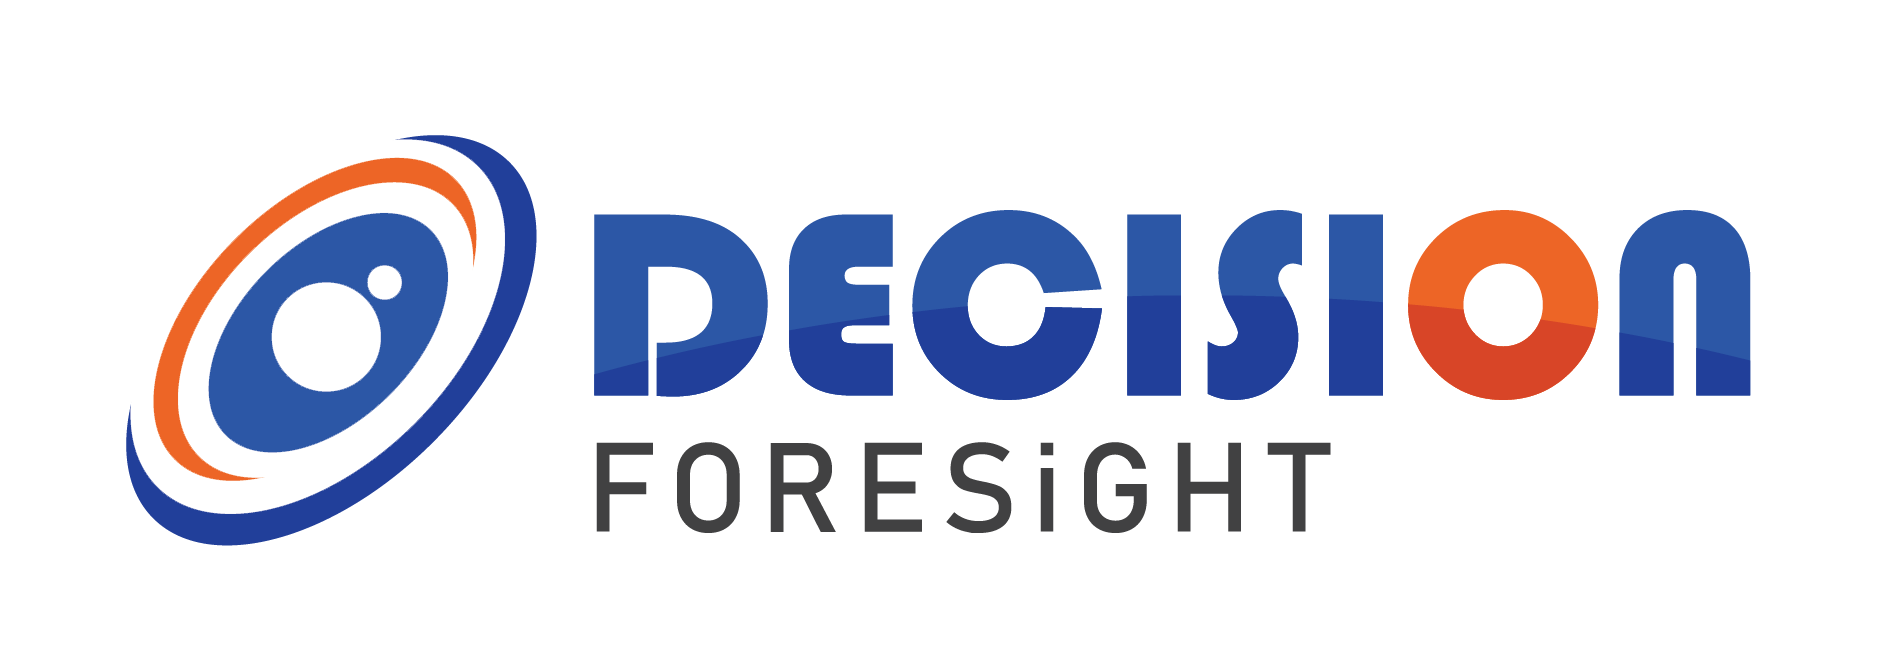 dfs-logo-ea61a761